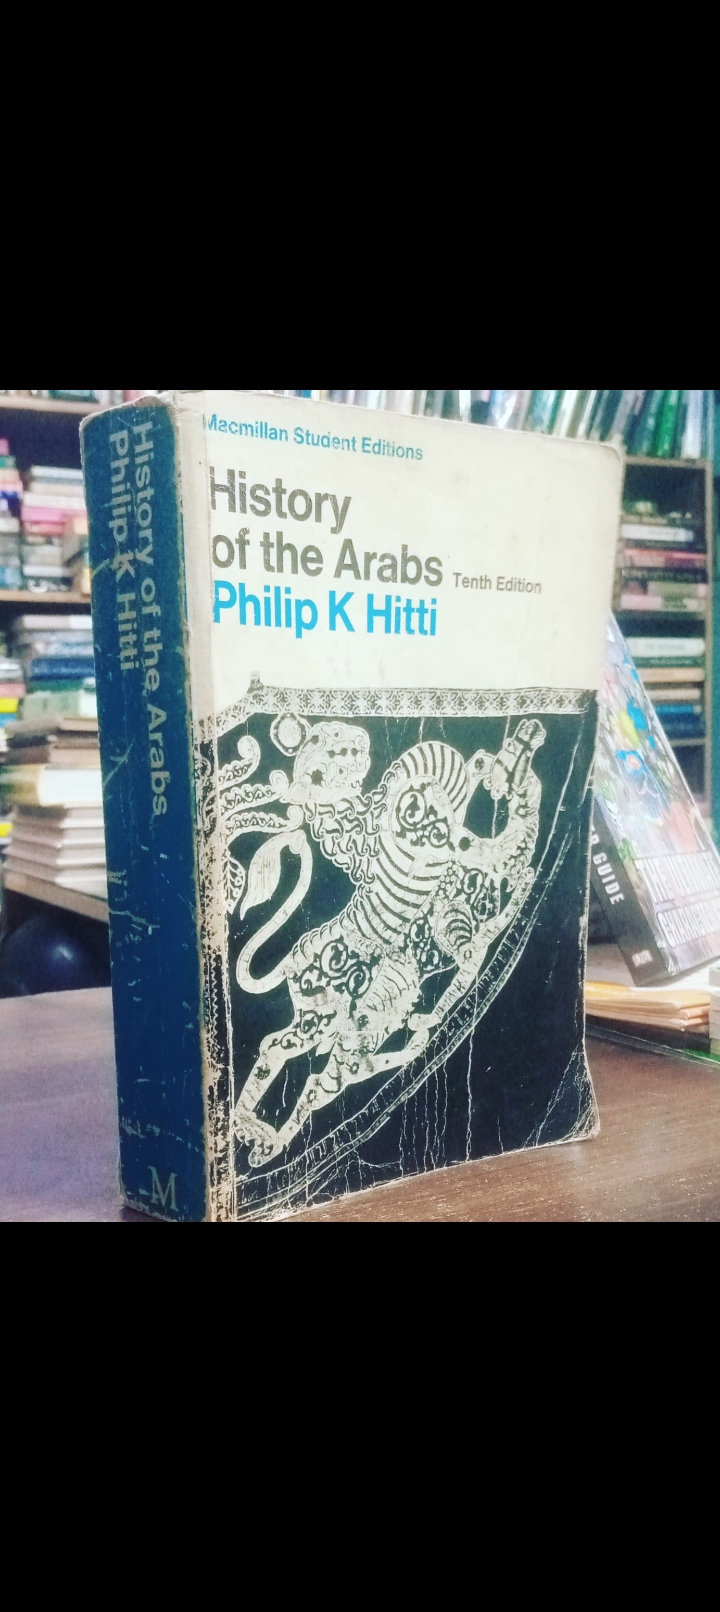 history of arabs by philip k hitti.original paperback